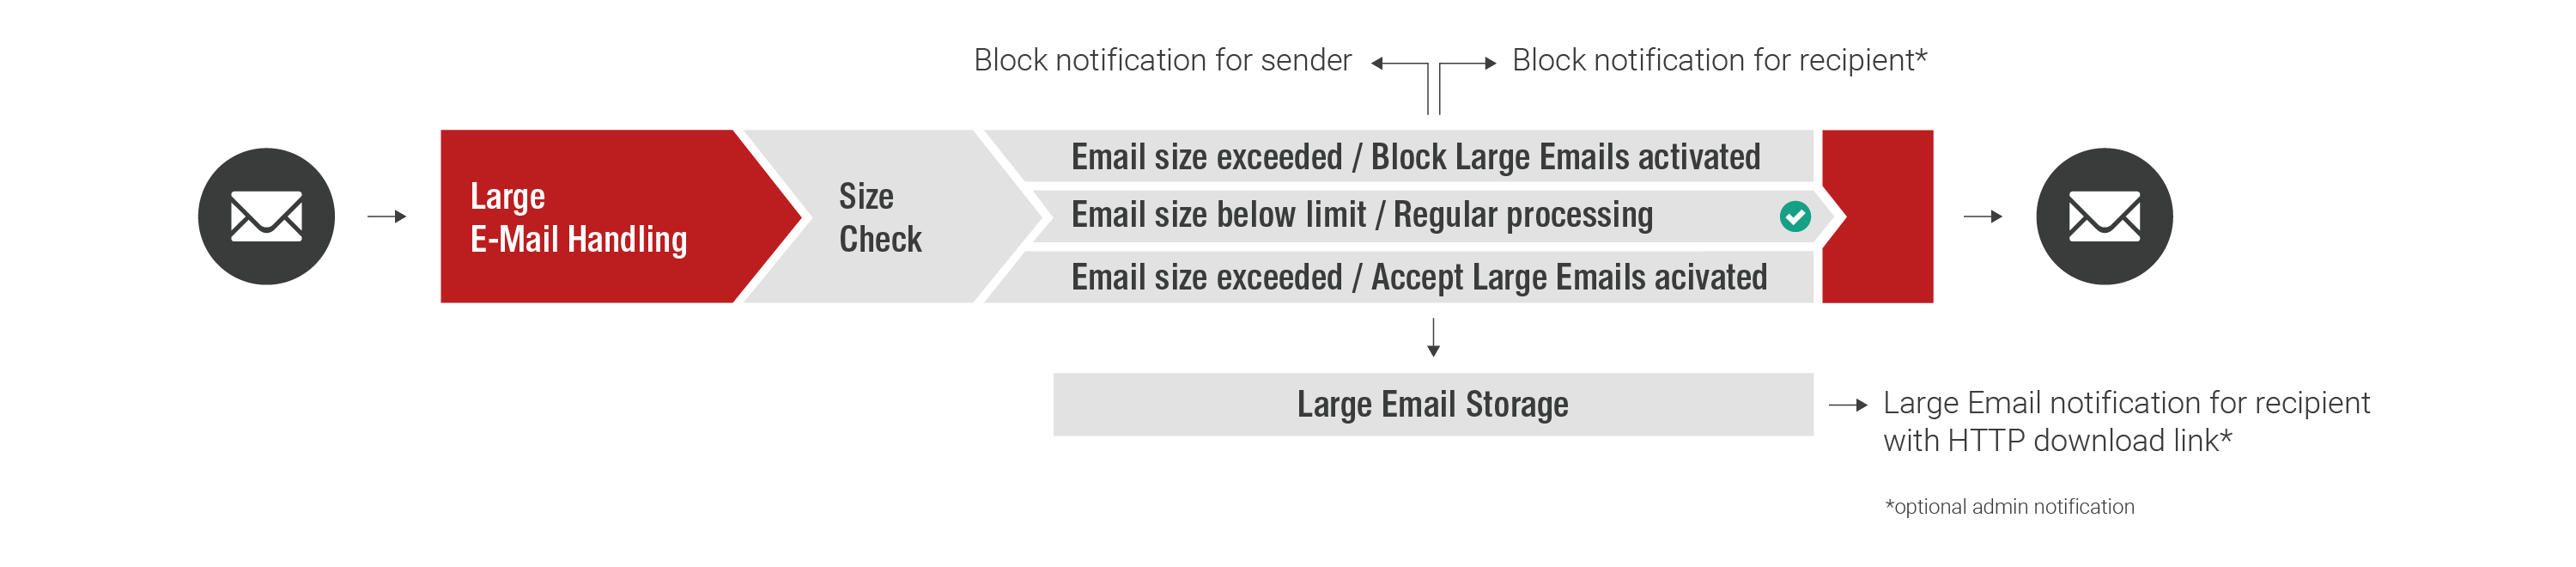 Large Email Handling